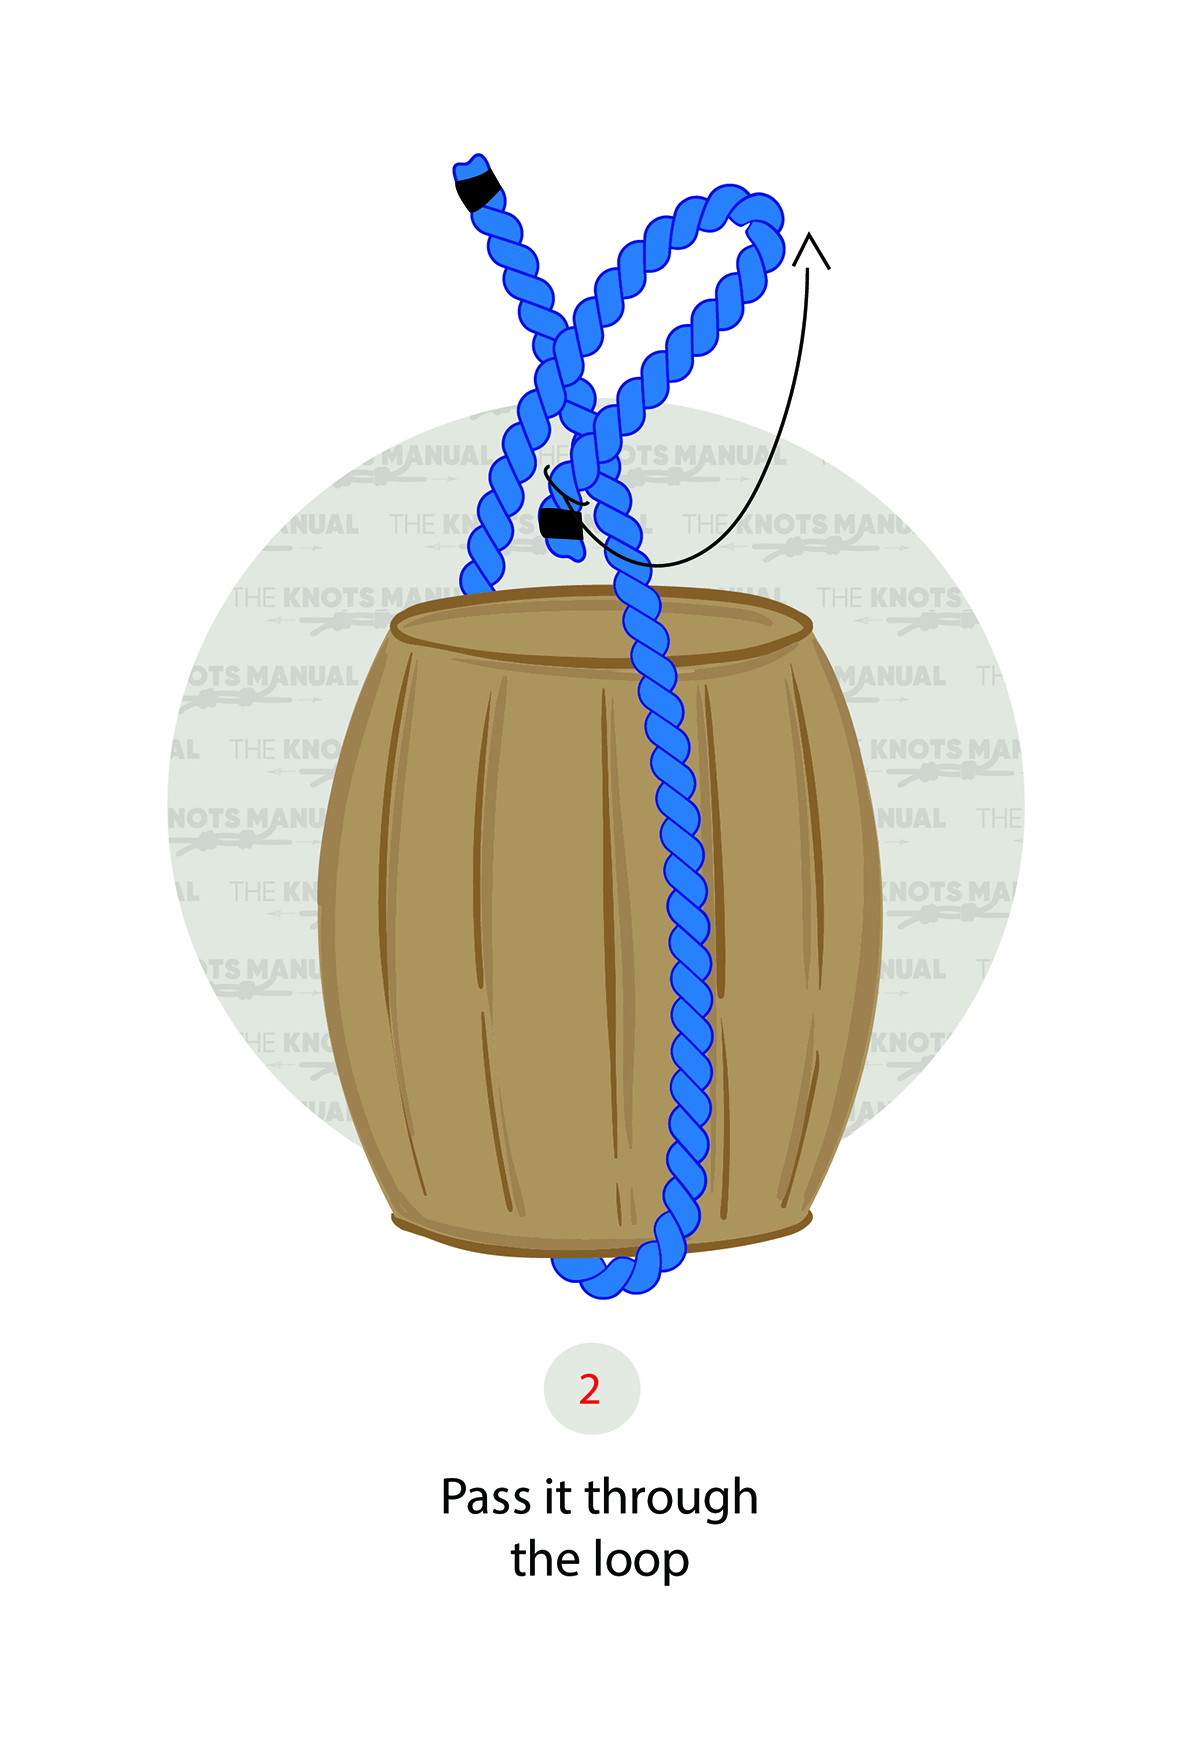 Barrel hitch knot step 2